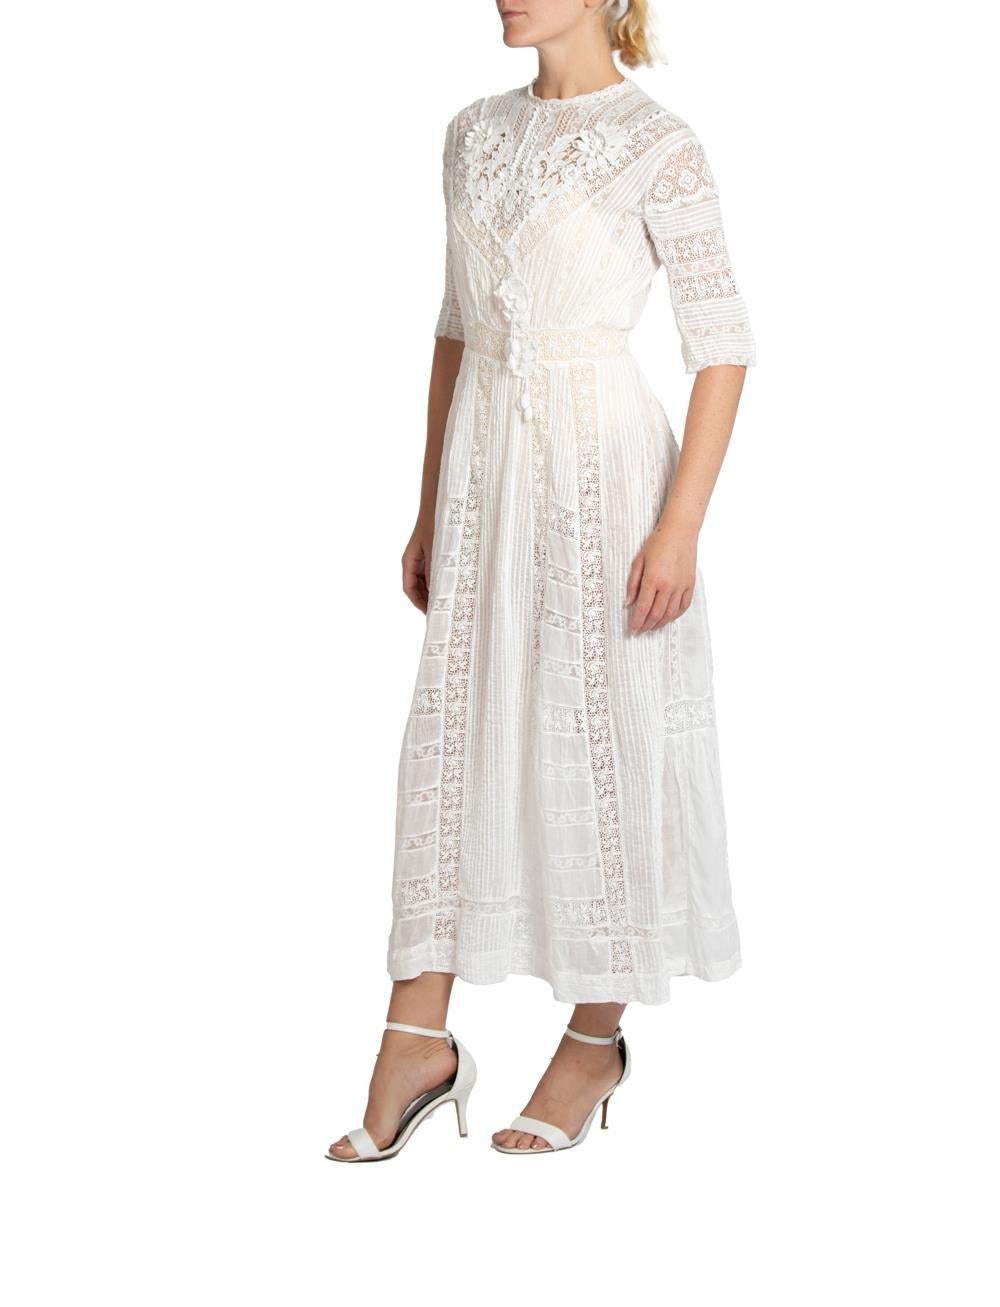 Edwardian White Cotton & Lace Tea Dress With 3-D Flowers For Sale 4